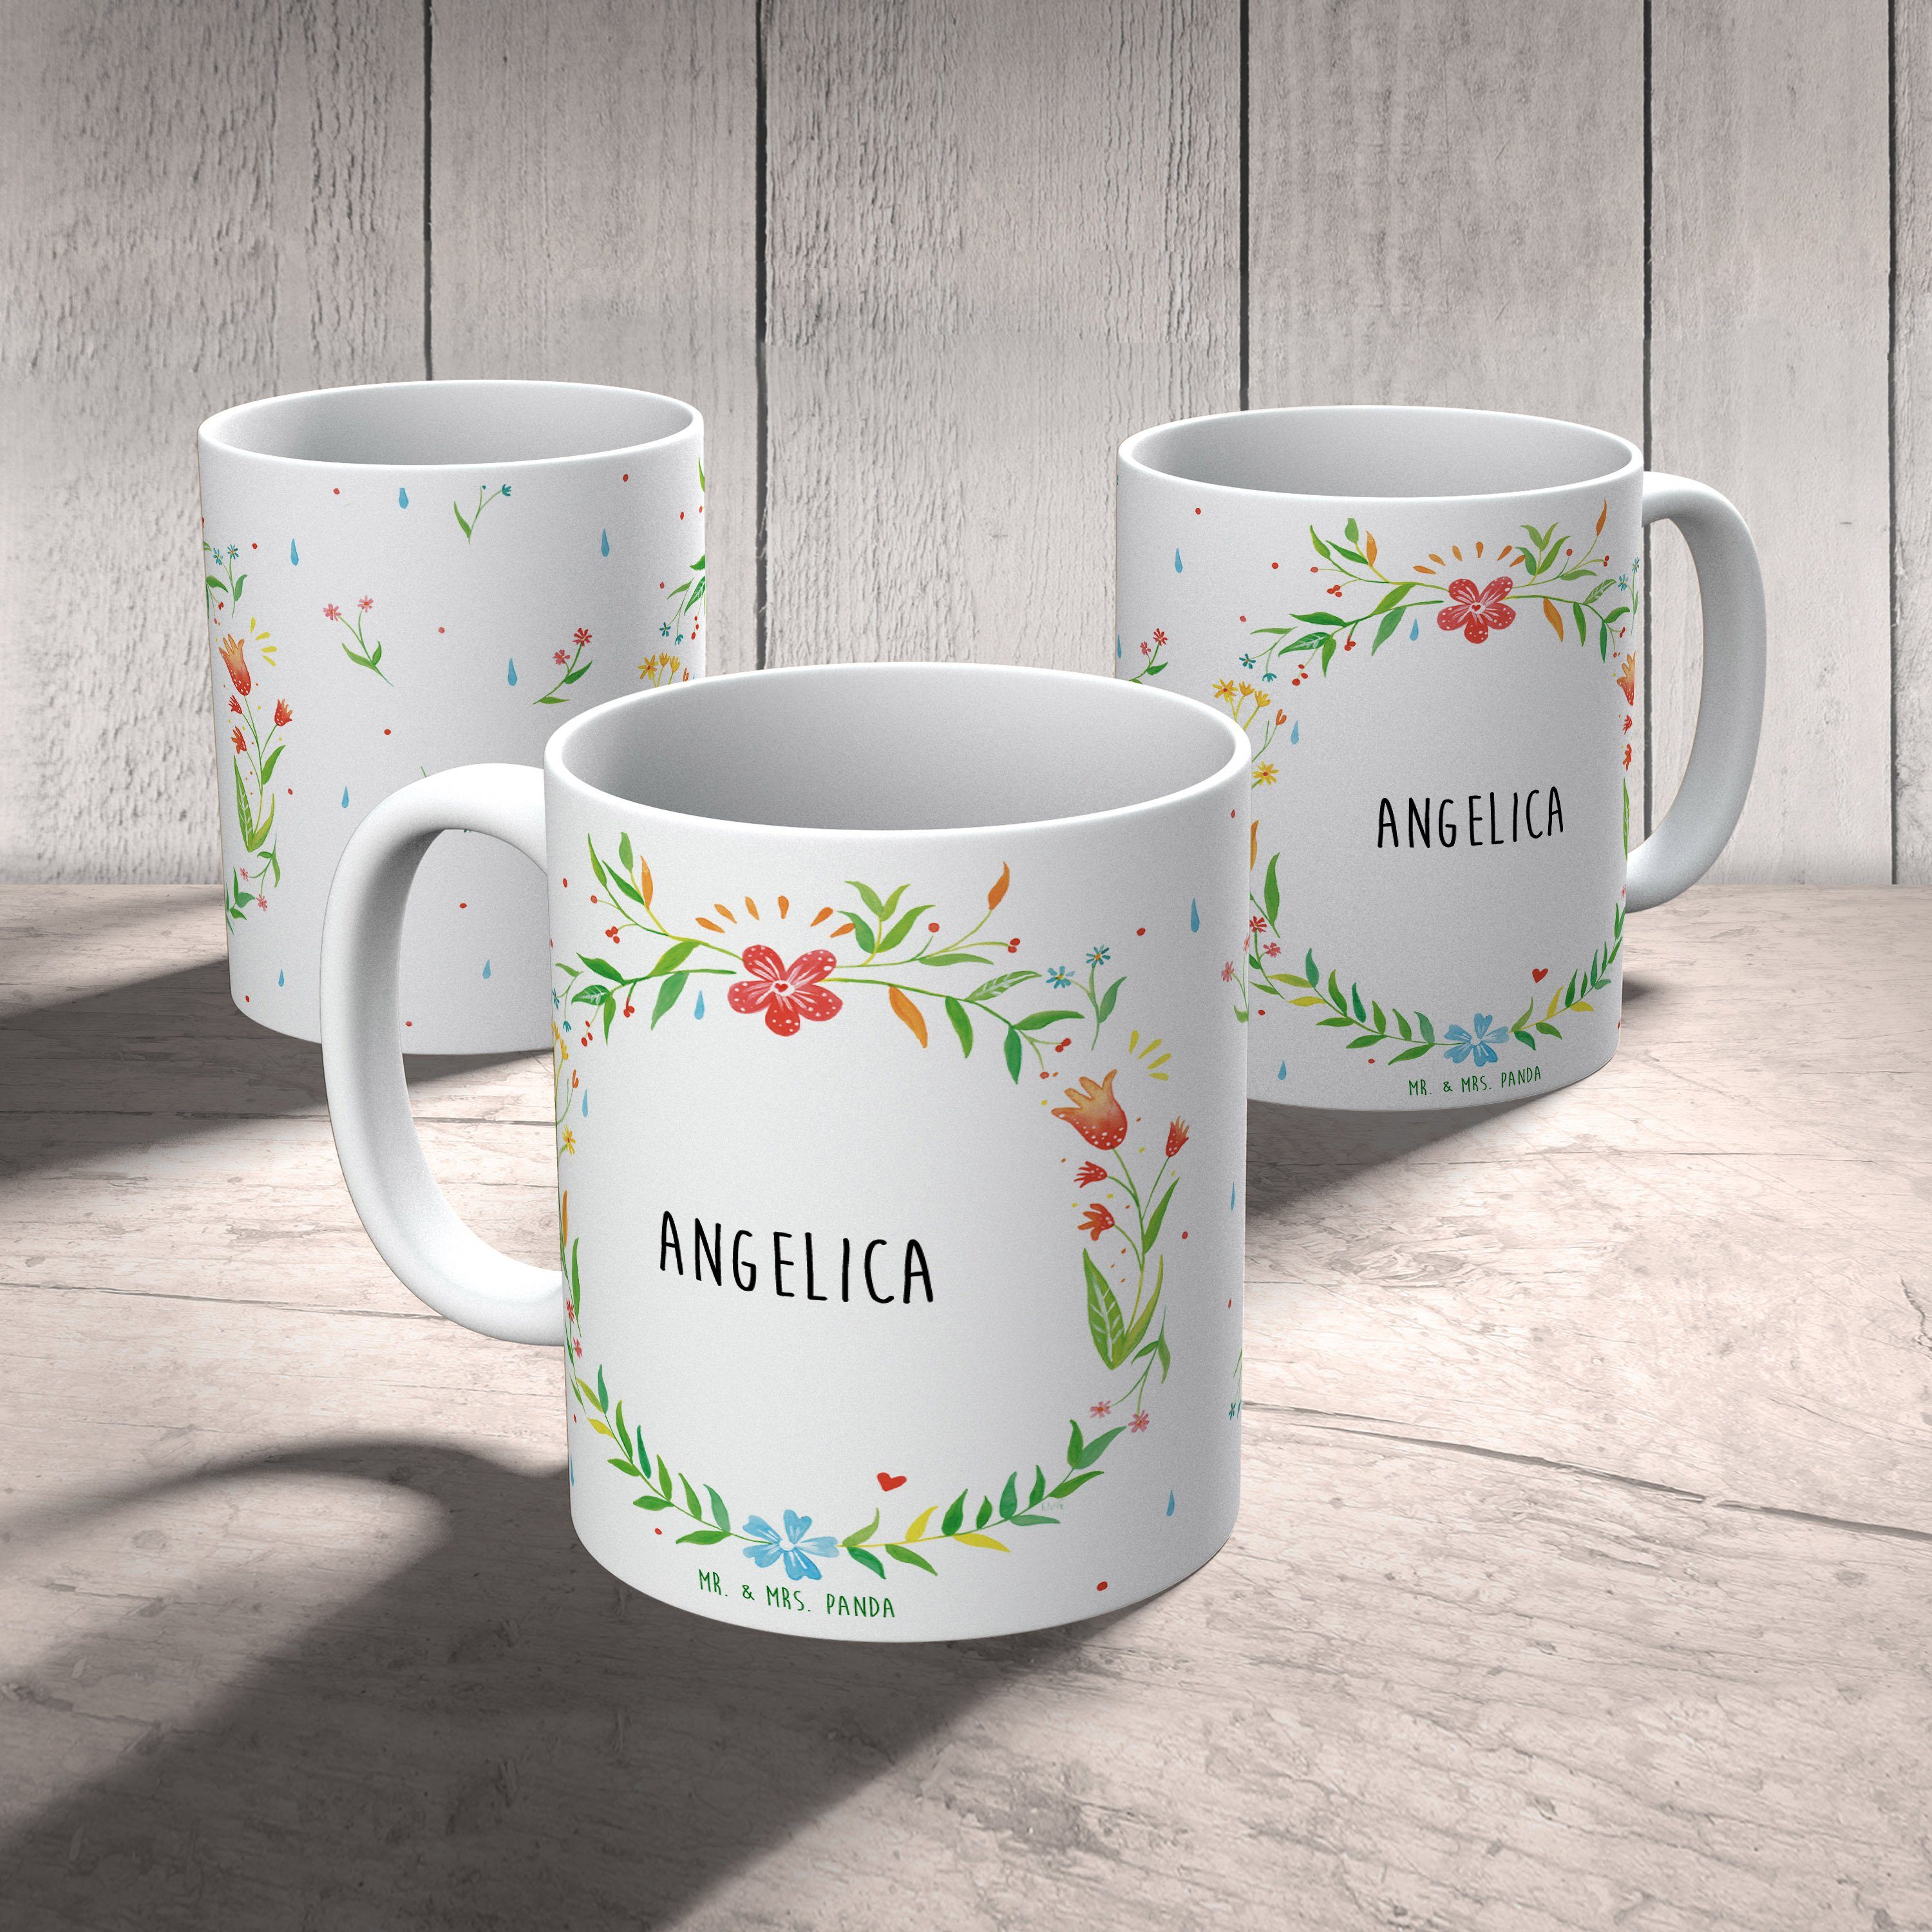 Mr. & Mrs. Panda Angelica Tasse, Kaffeetasse, Keramik Tasse Geschenk, - Büro Teebecher, Keramiktasse